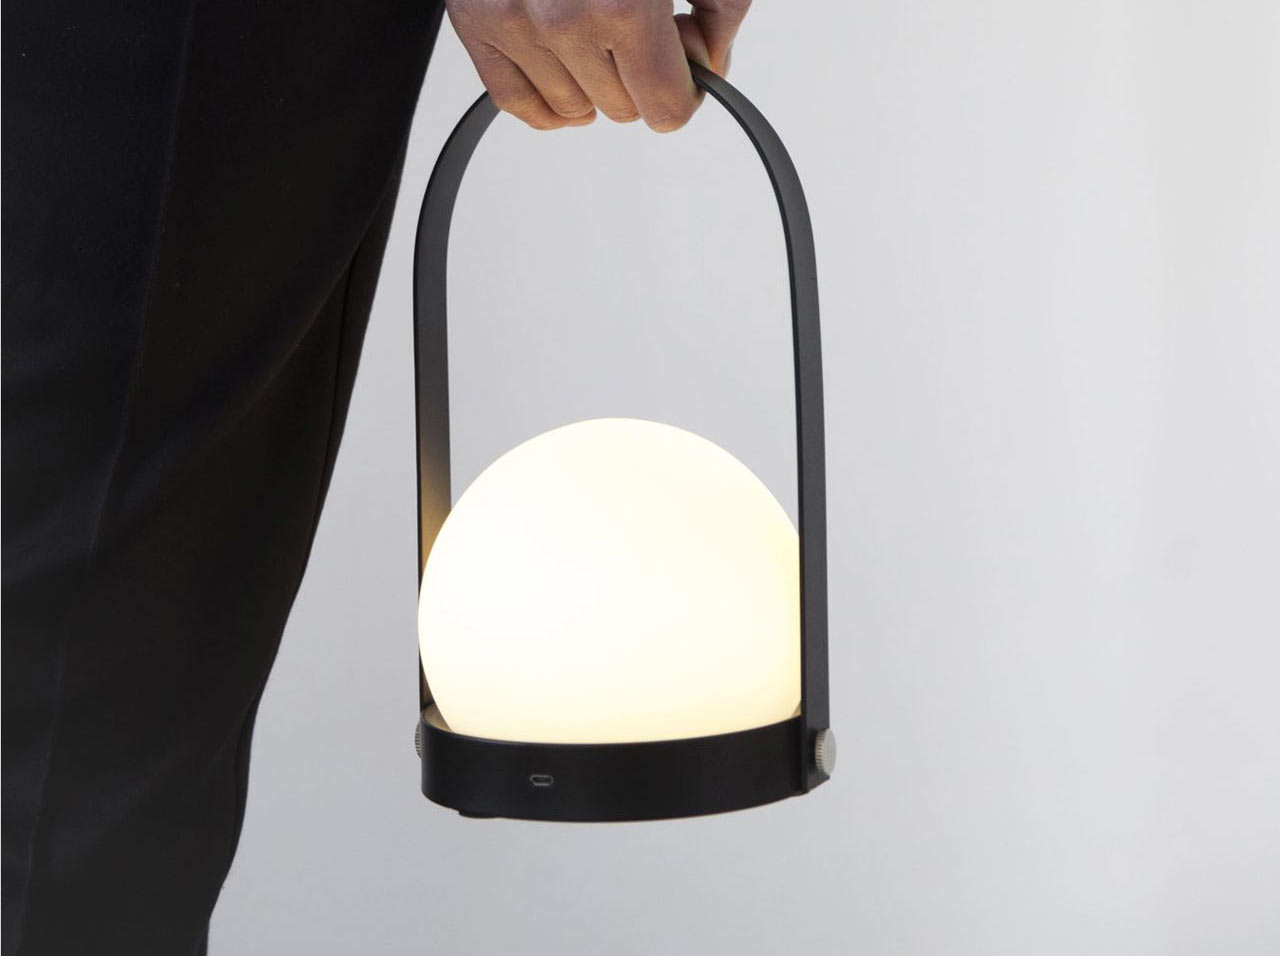 https://design-milk.com/images/2020/02/Roundup-Portable-LED-Lamps-0bbb-Carrie_MENU.jpg